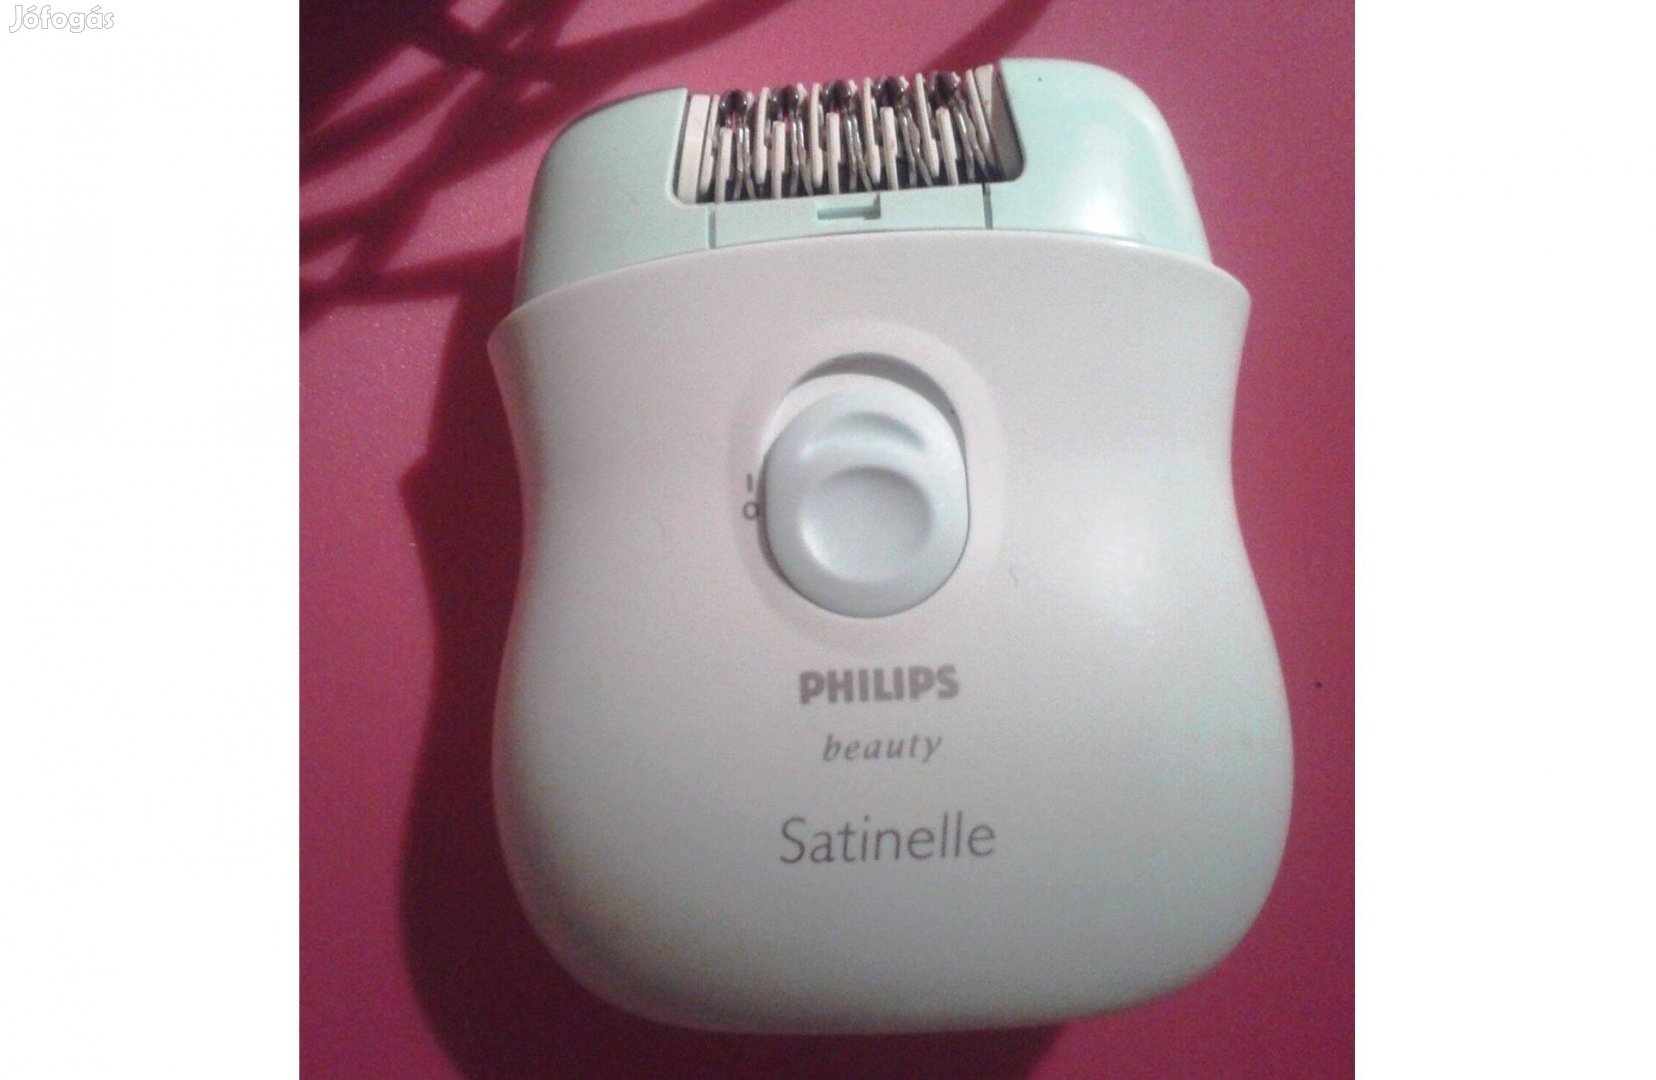 Philips epillátor